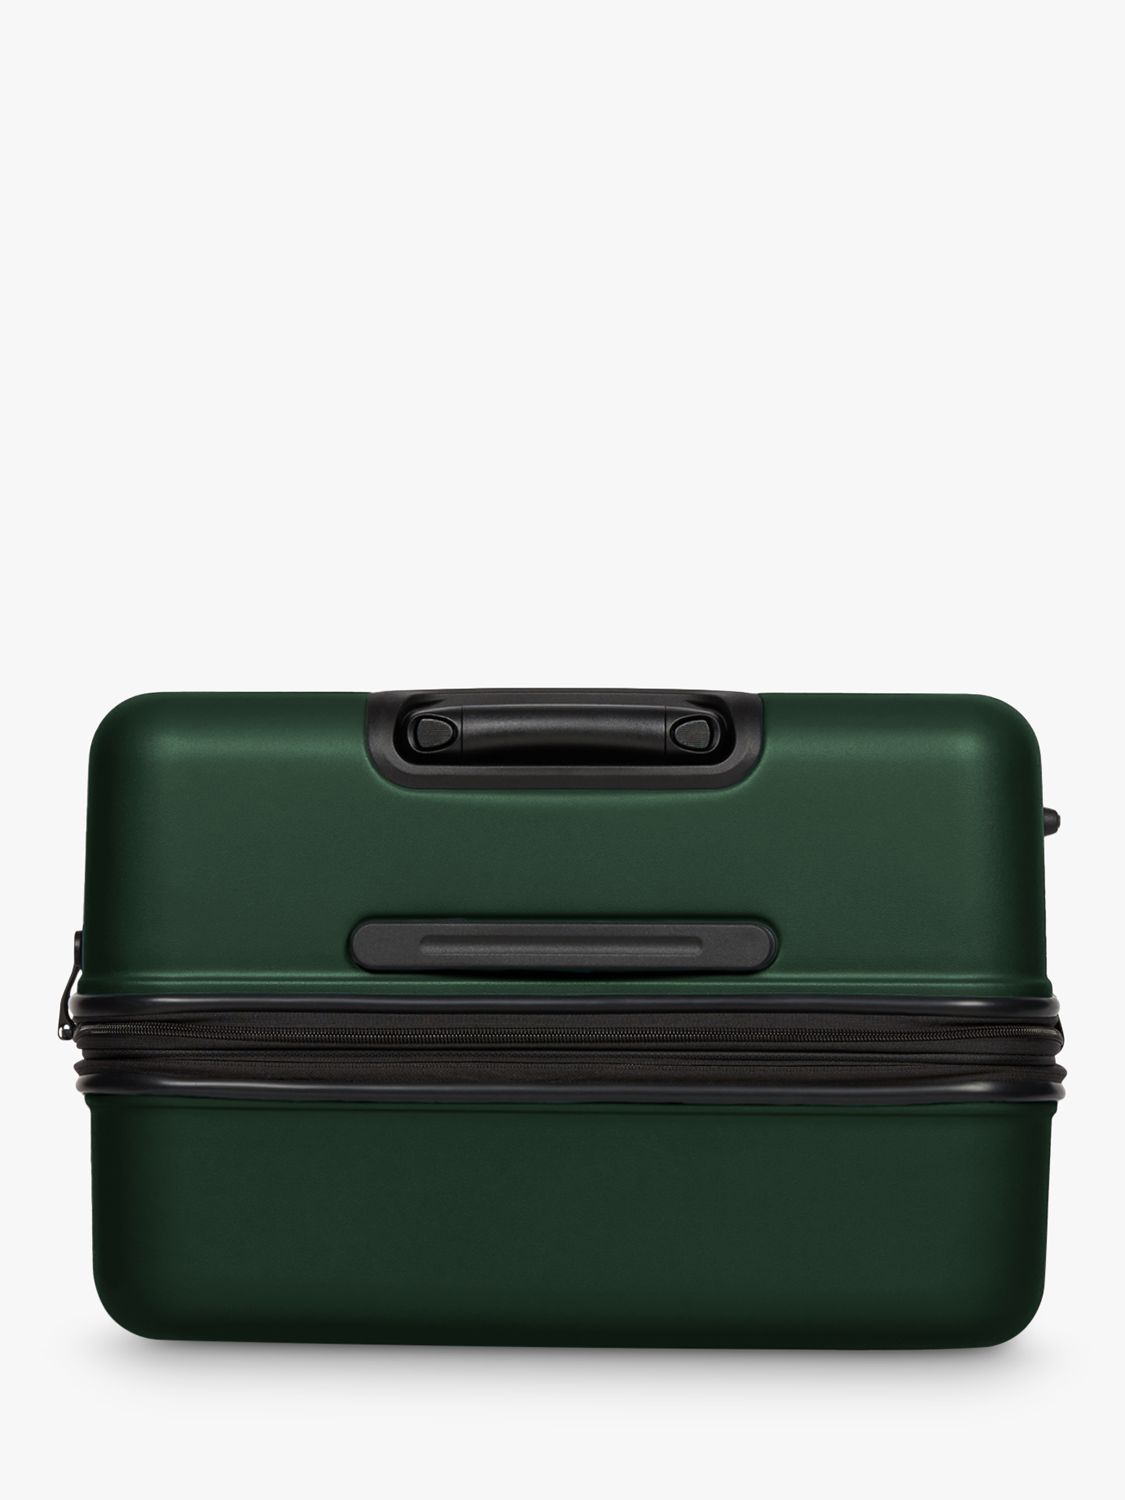 Antler Clifton 4-Wheel 80cm Large Expandable Suitcase, Woodland Green